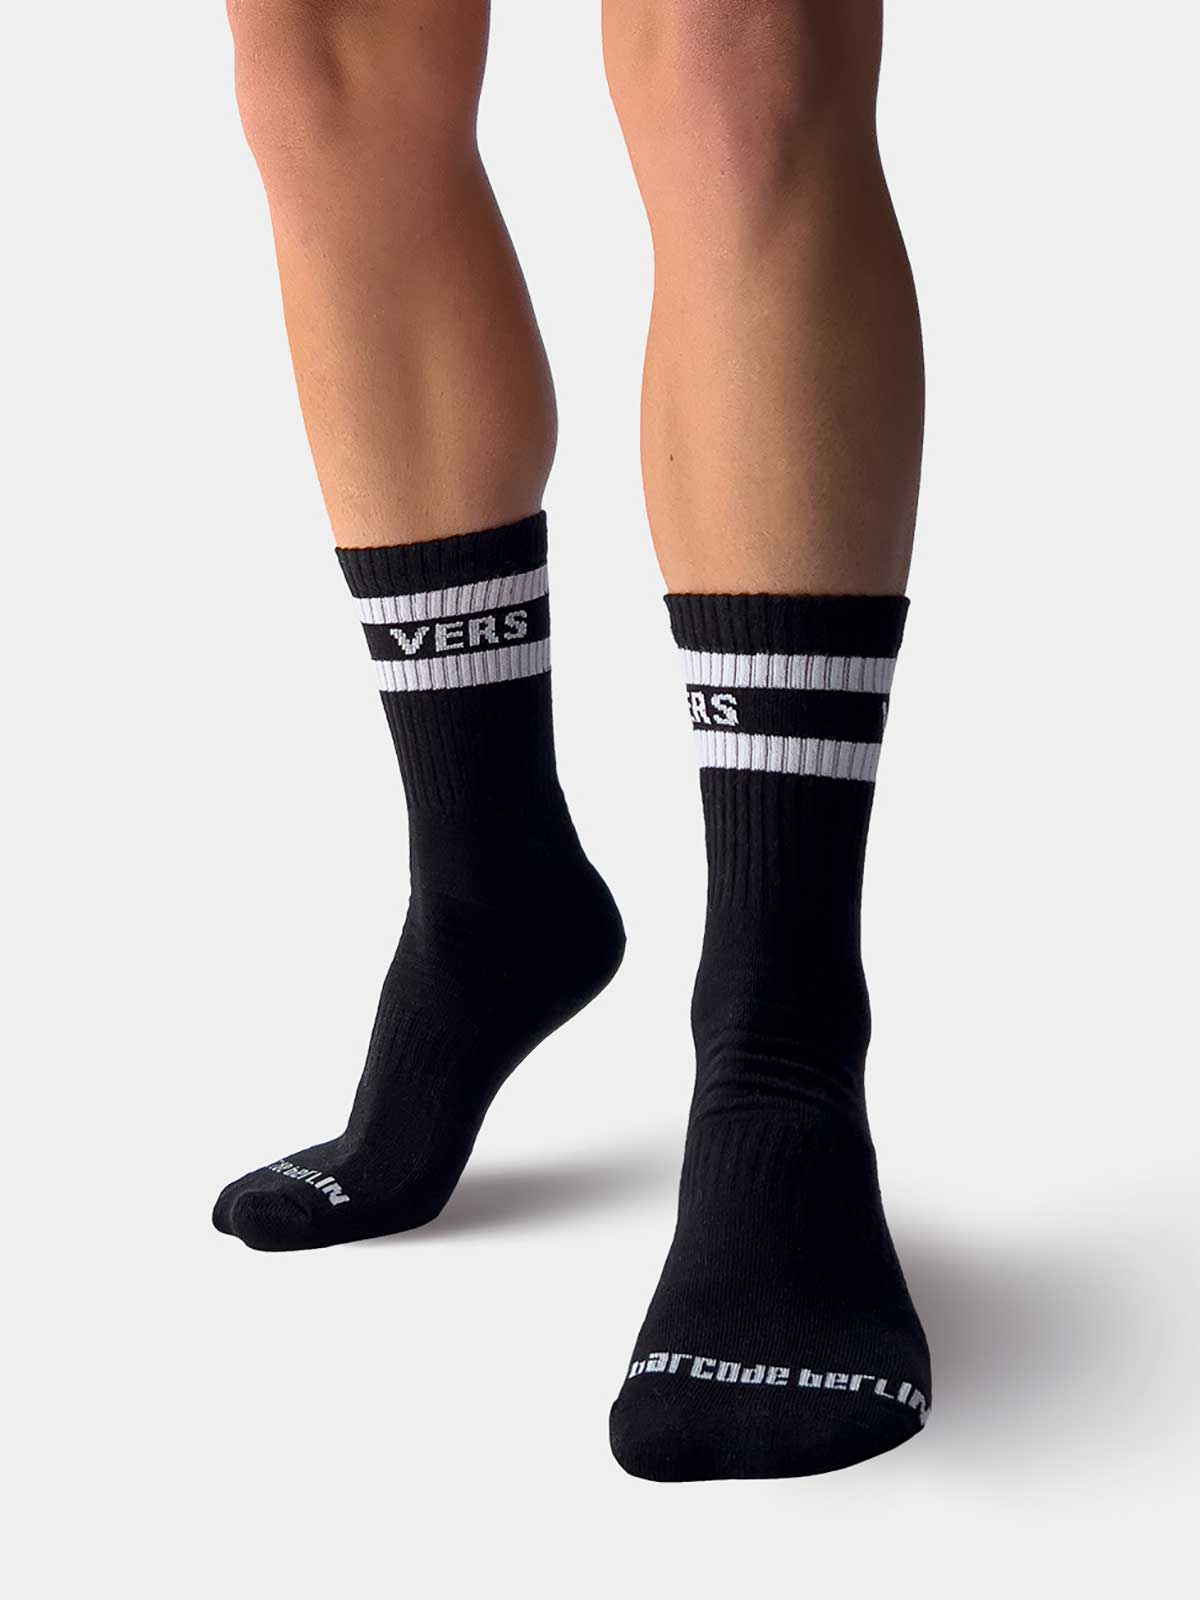 Socks Fetish Half Socks "VERS" | Black/White